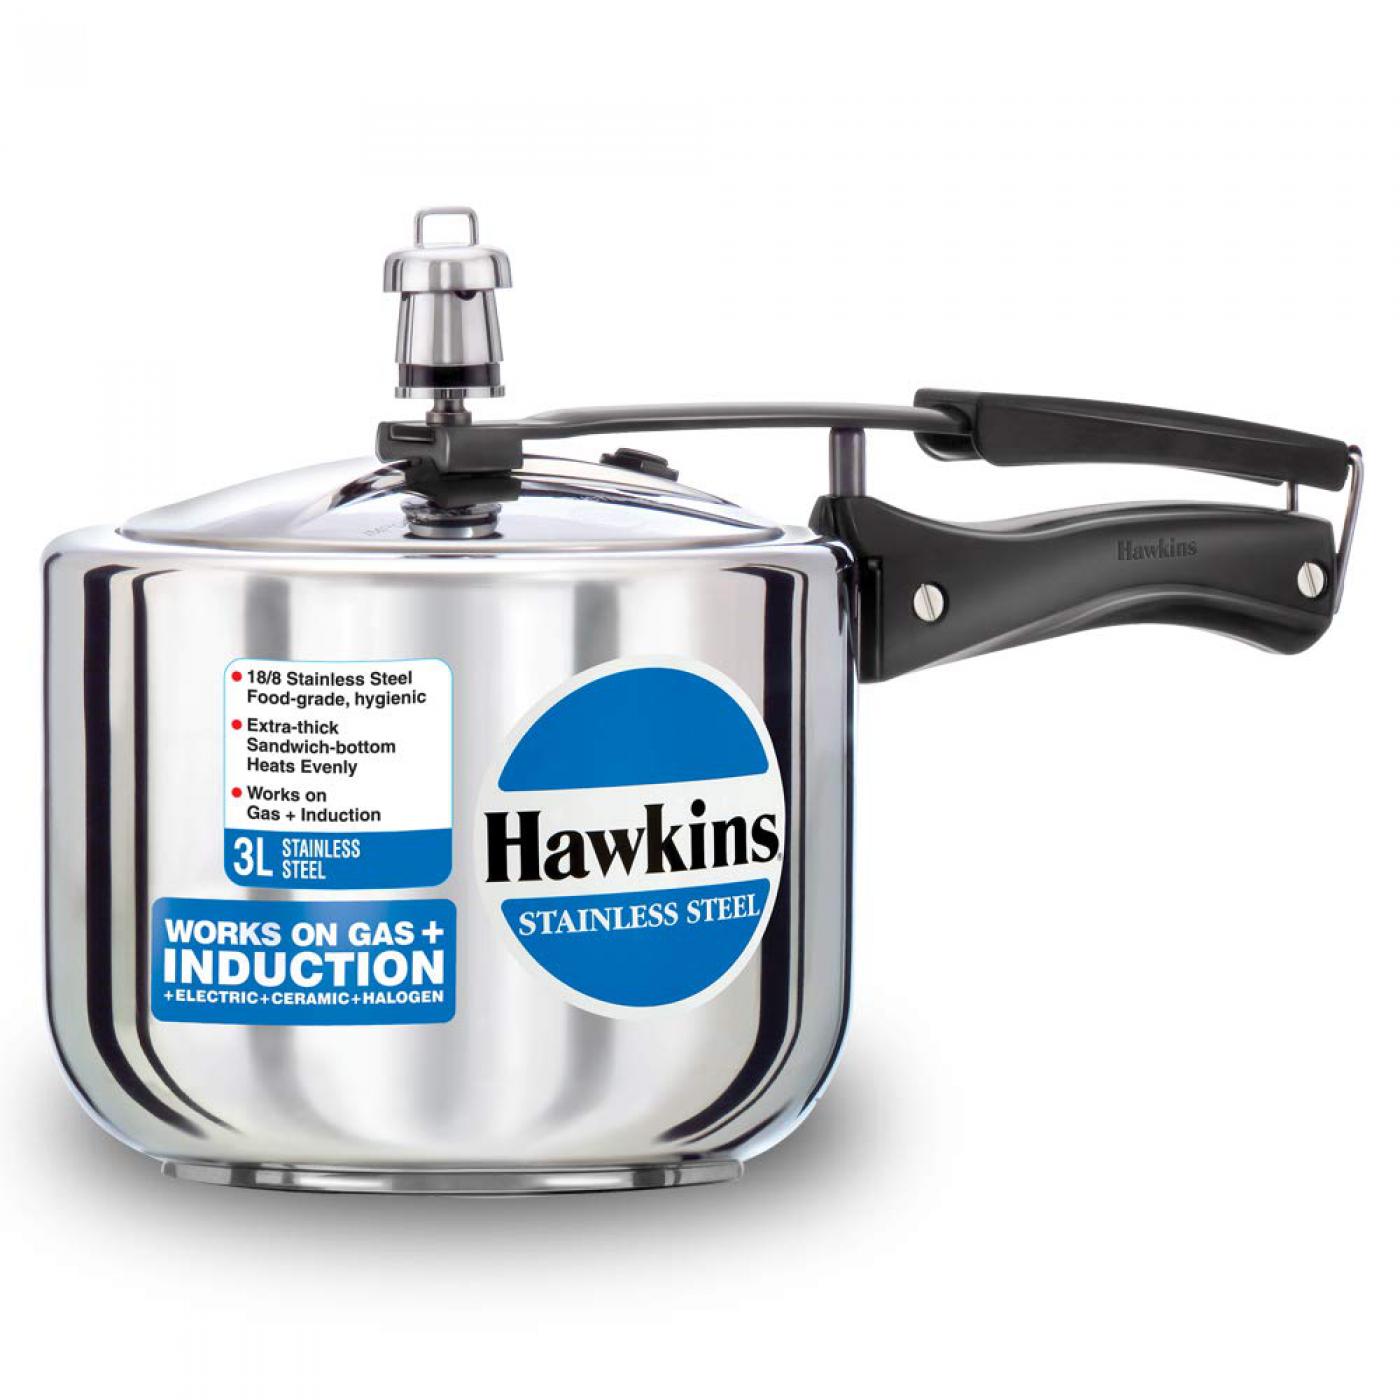 Hawkins Stainless Steel 3 Ltr